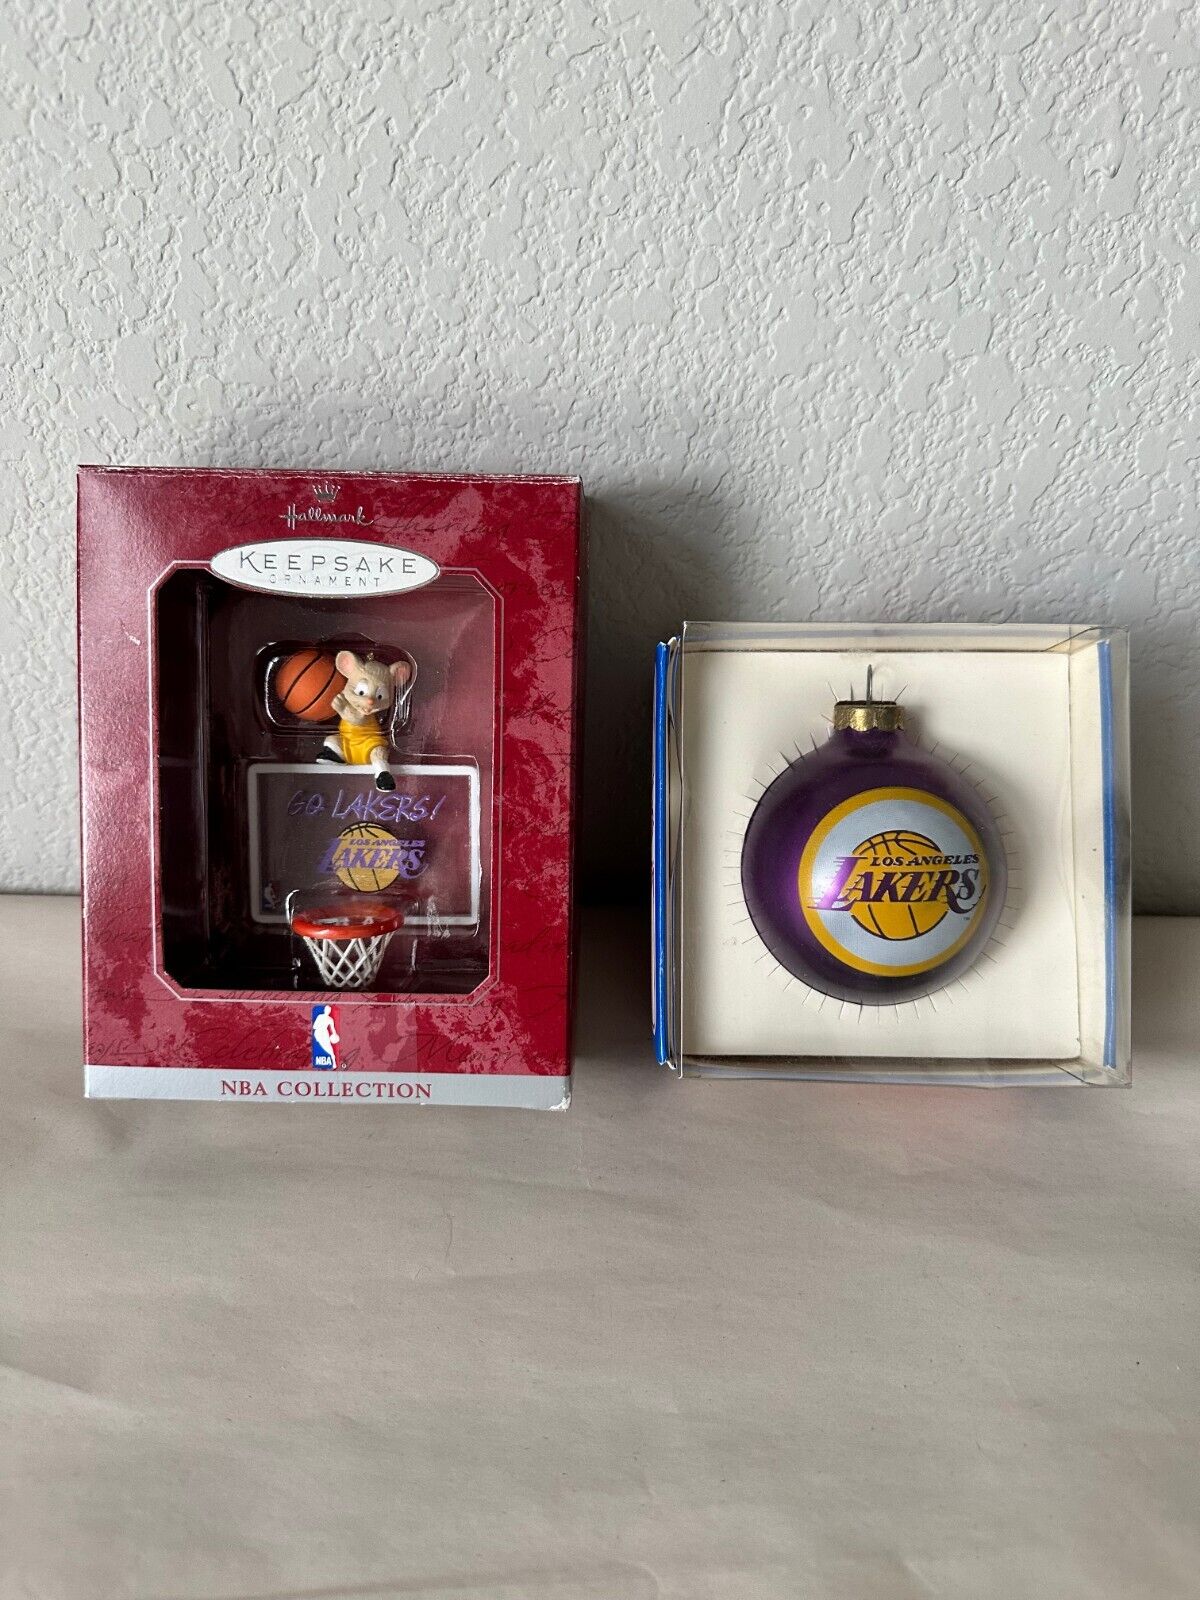 lakers hallmark keepsake ornament and vintage sports collectors series ornament